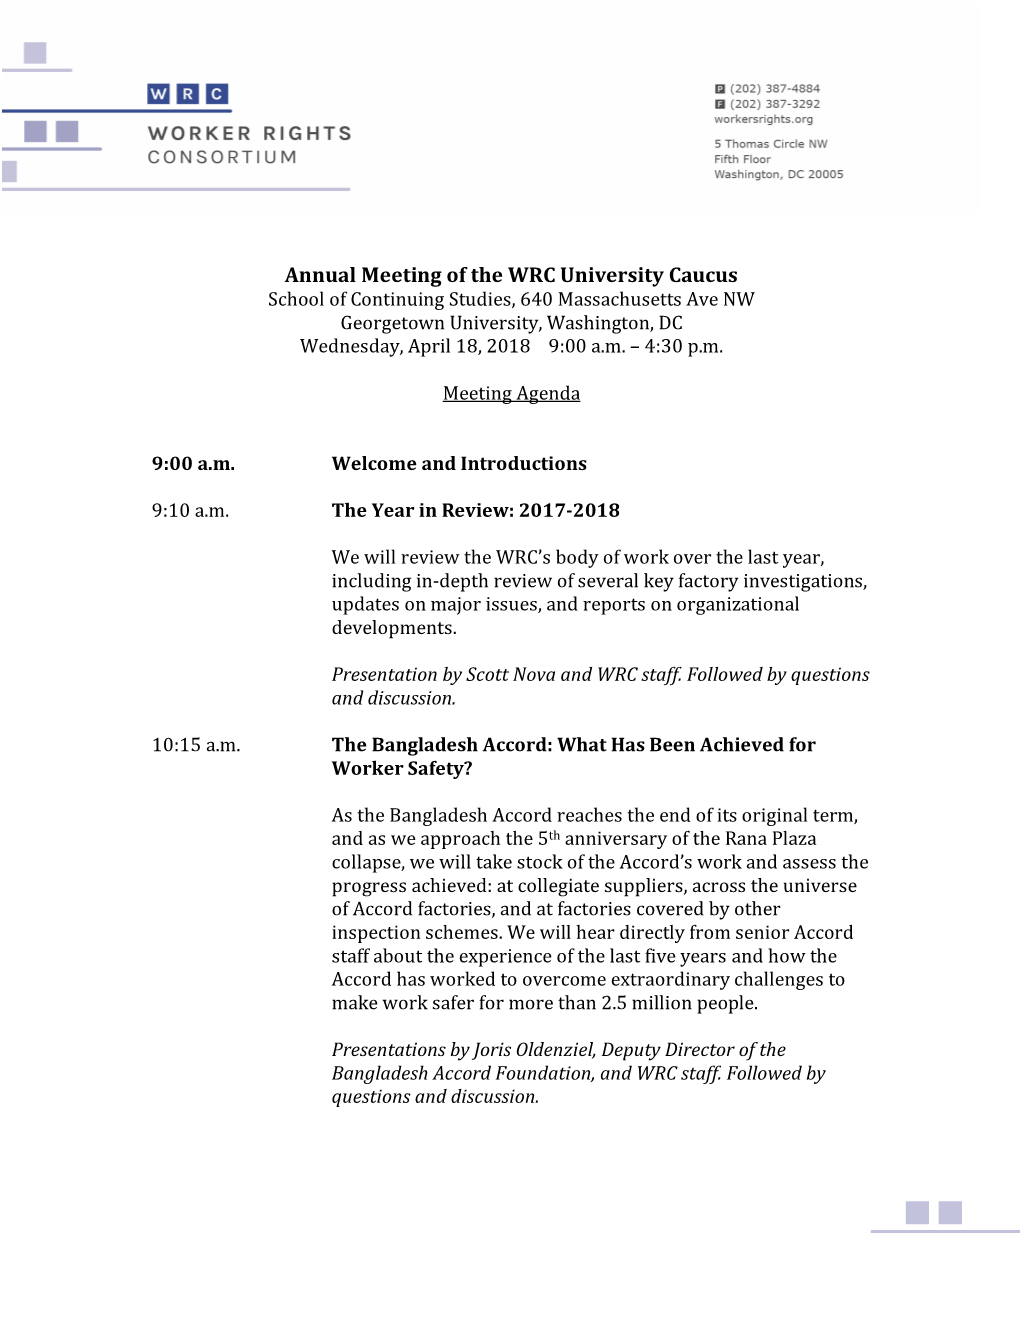 WRC University Caucus Meeting Agenda